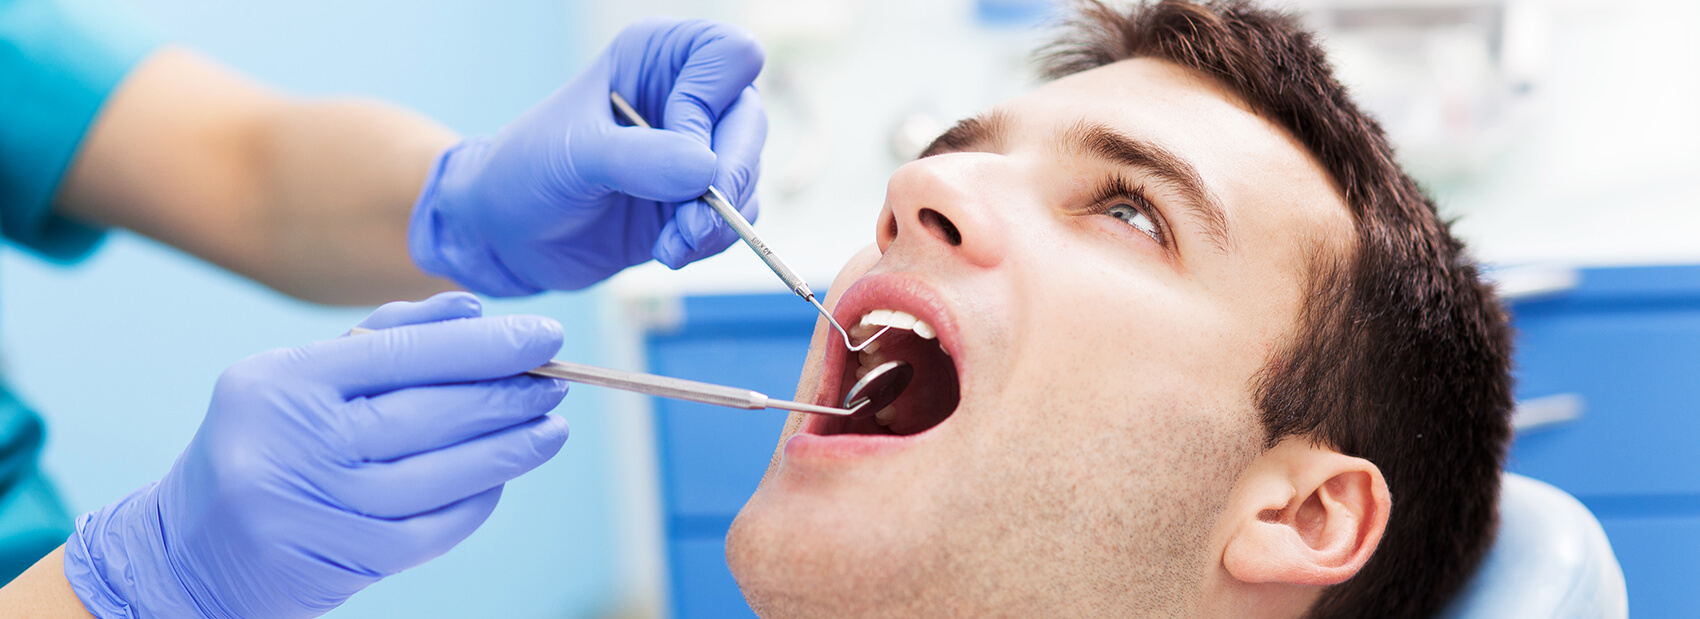 man having his teeth examined by his dentist